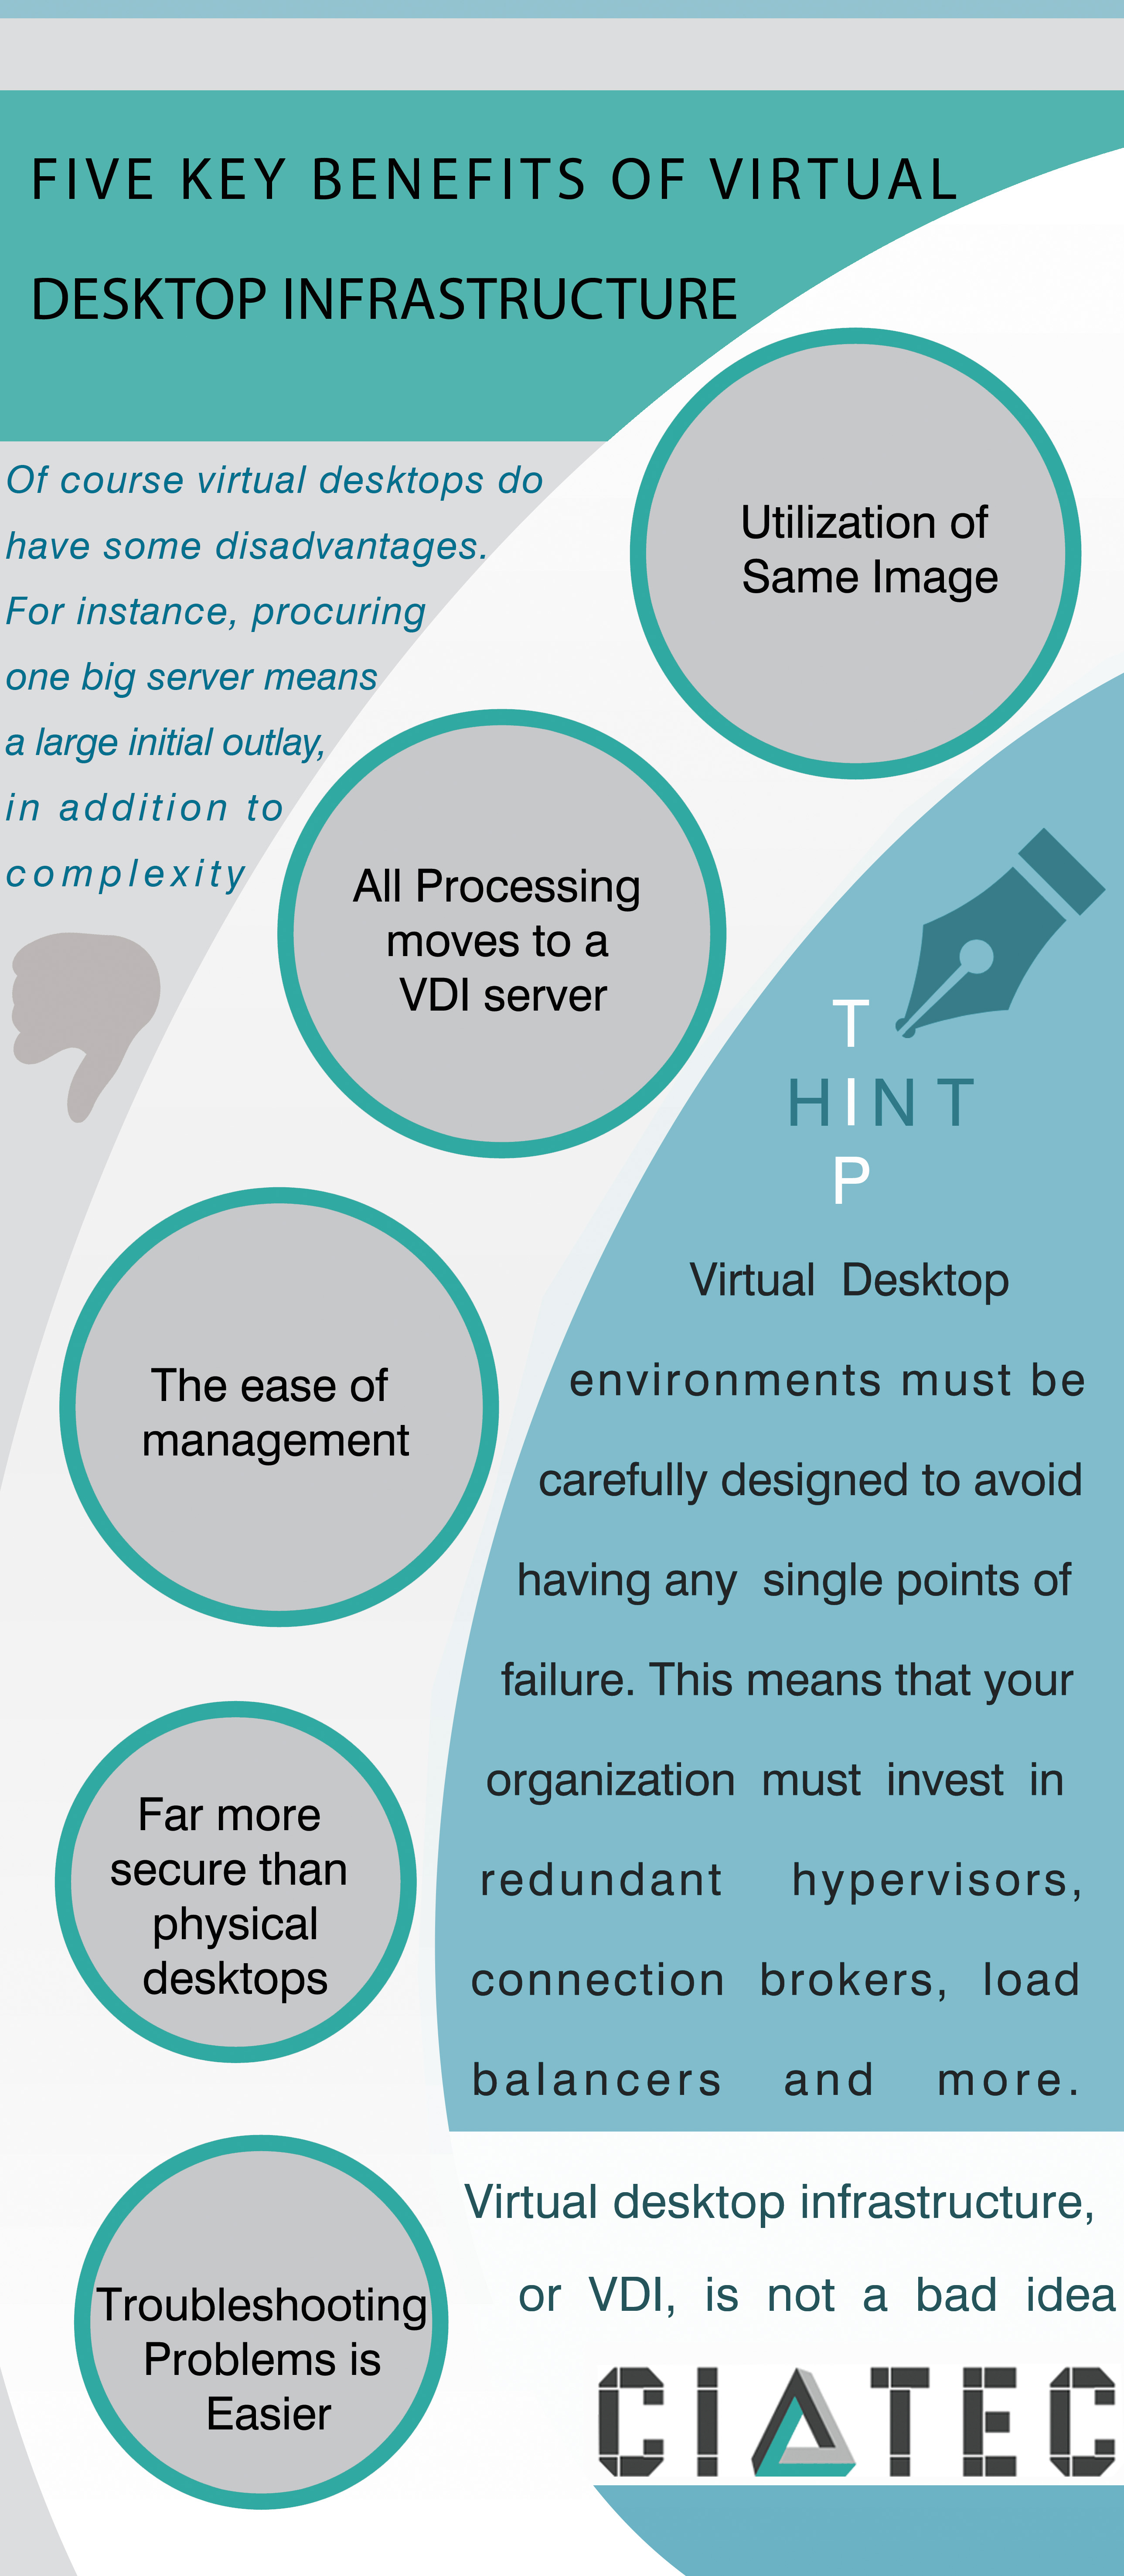 Key Benefits of Virtual Desktop Infrastructure (VDI)